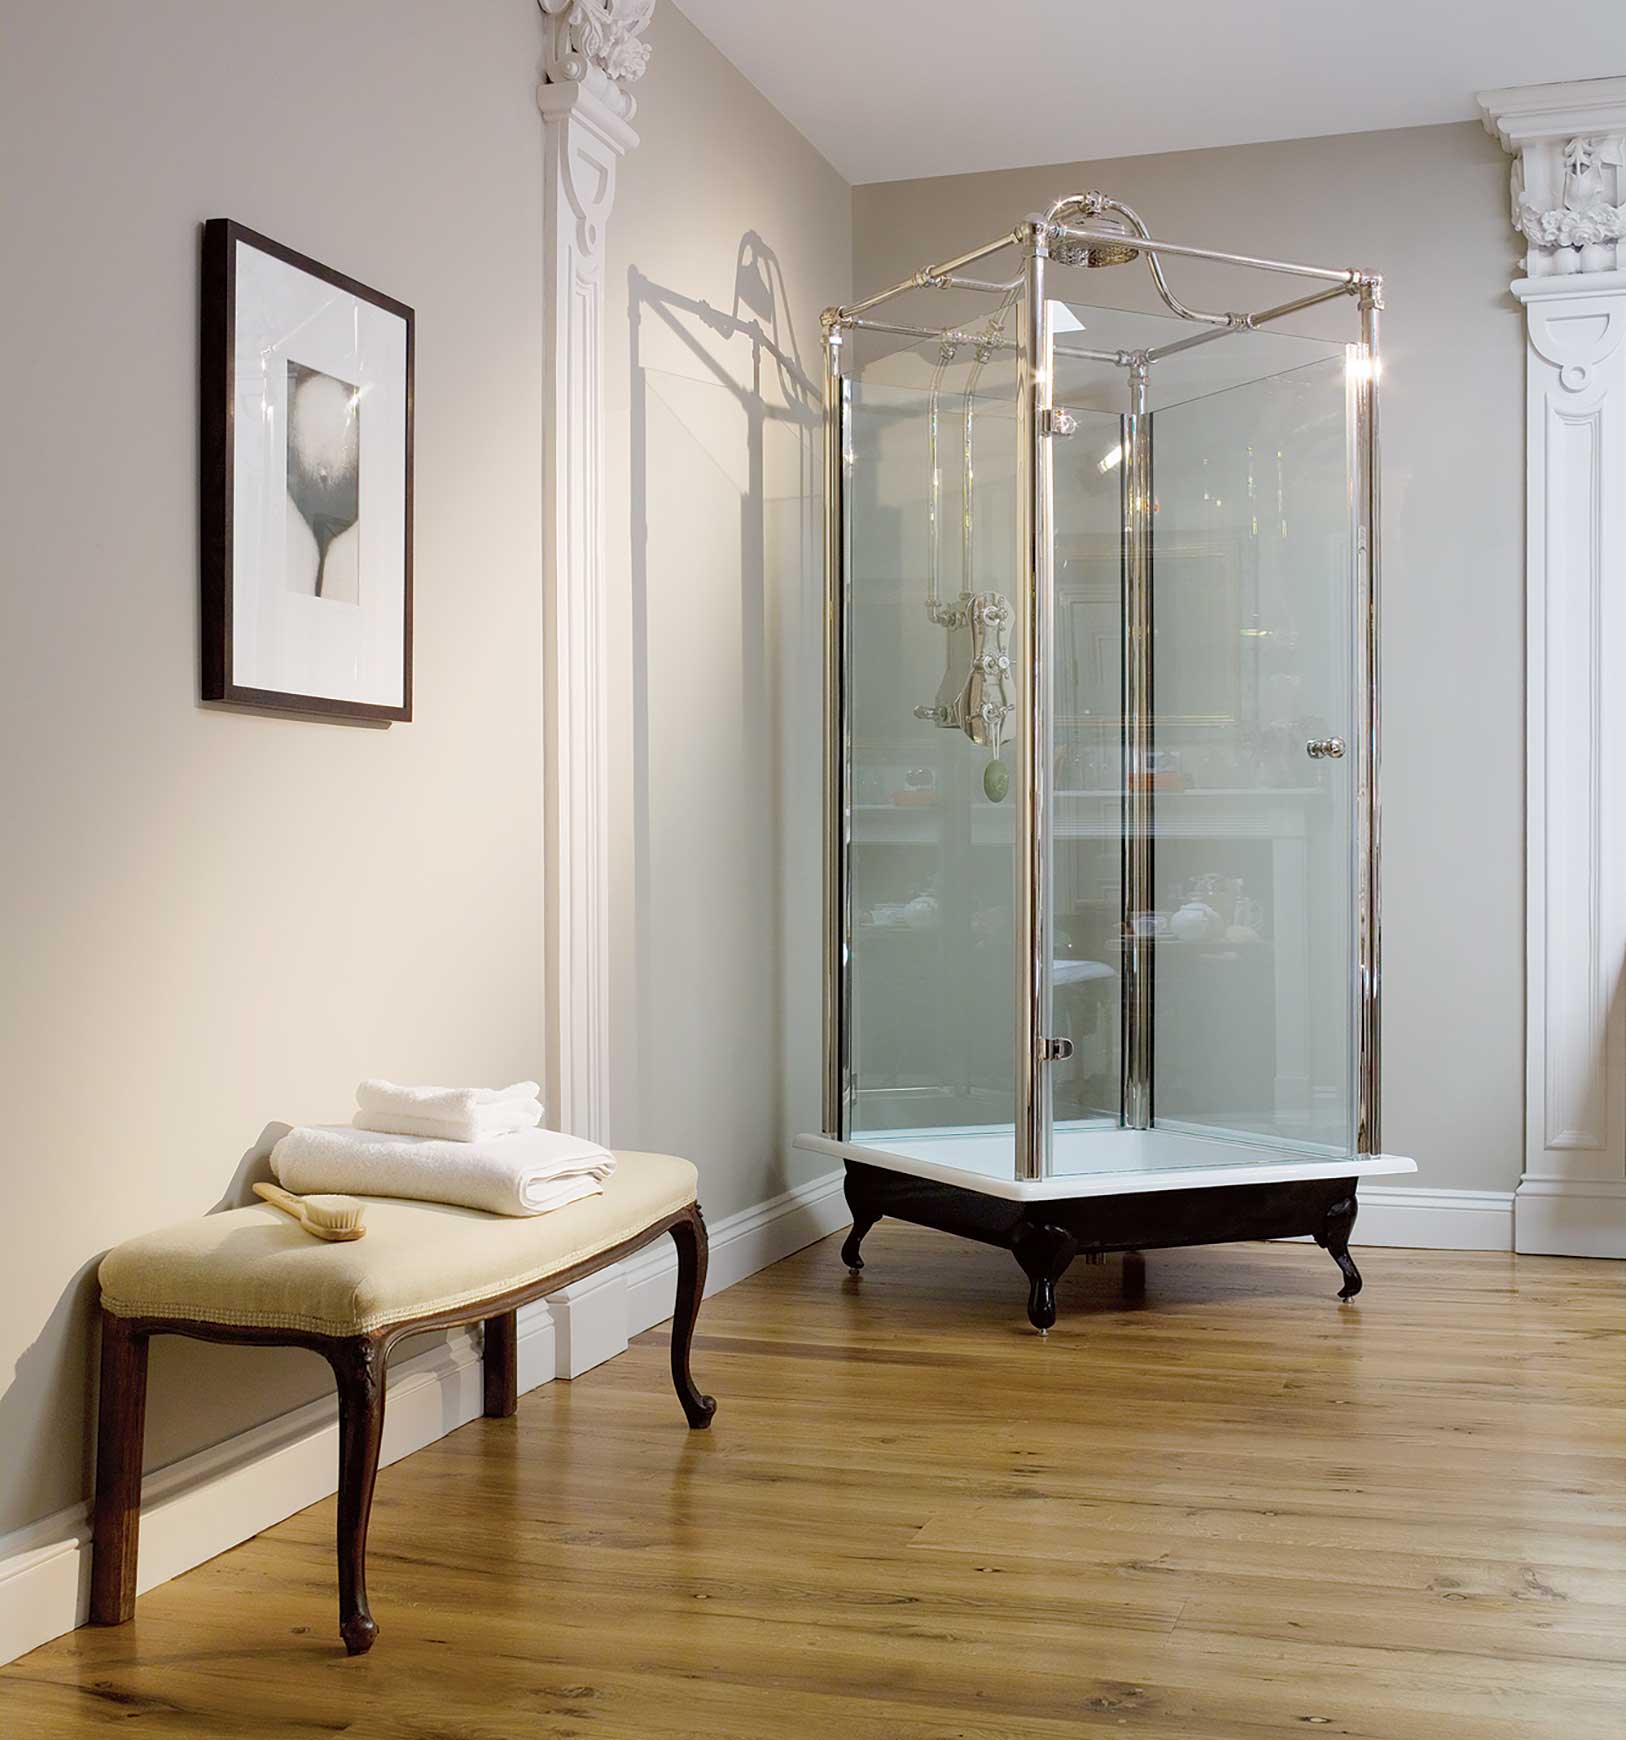 The Thurso Freestanding Shower - Drummonds Bathrooms